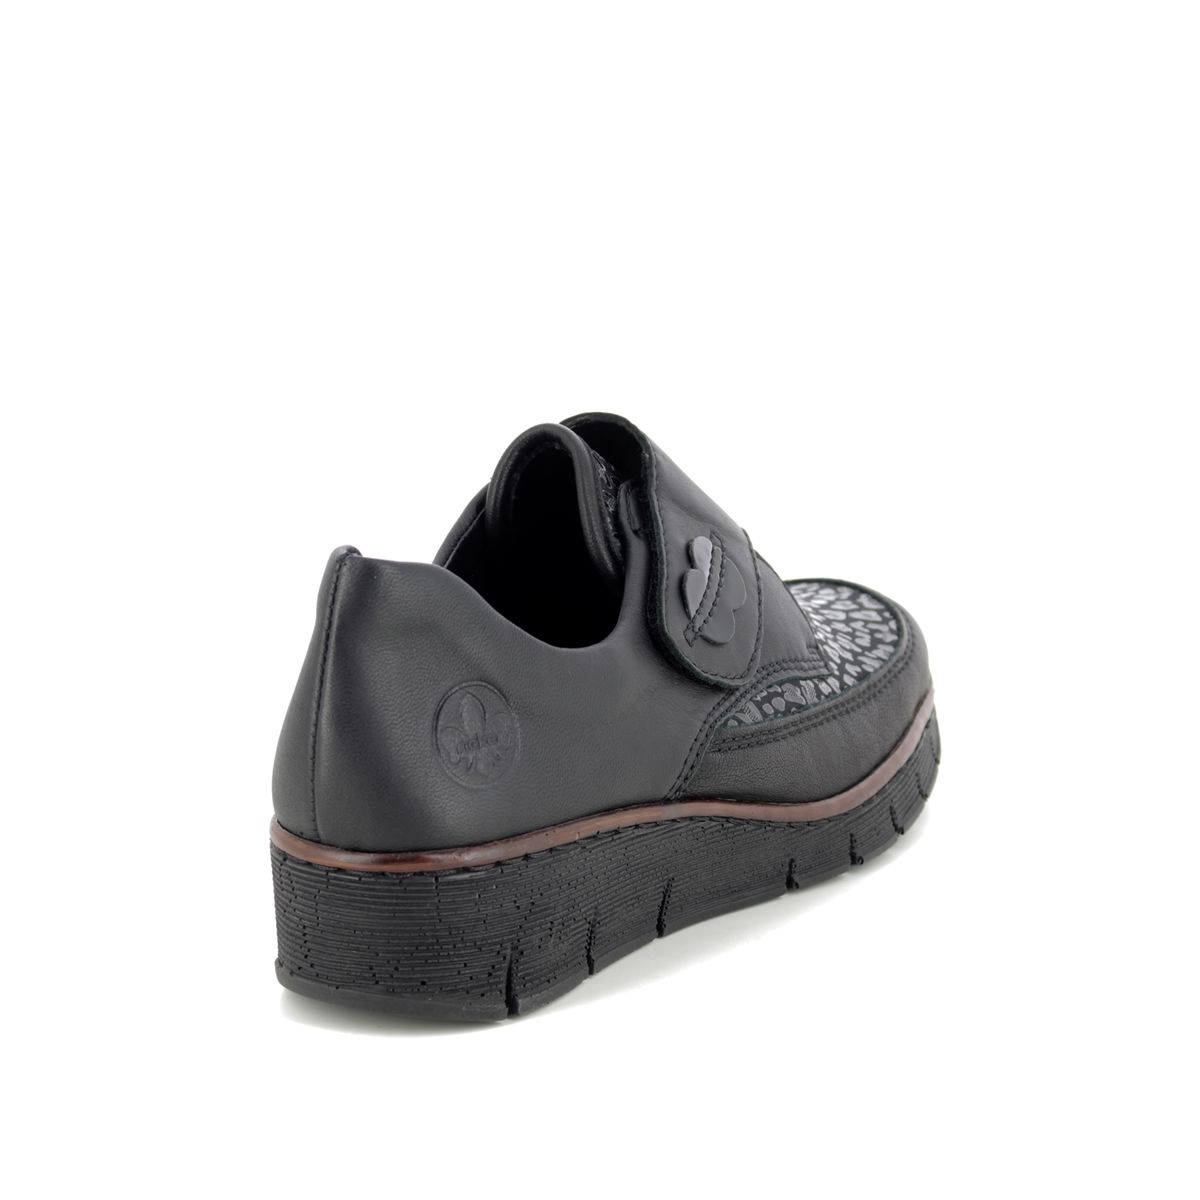 Rieker 537C0-00 Black Comfort Slip